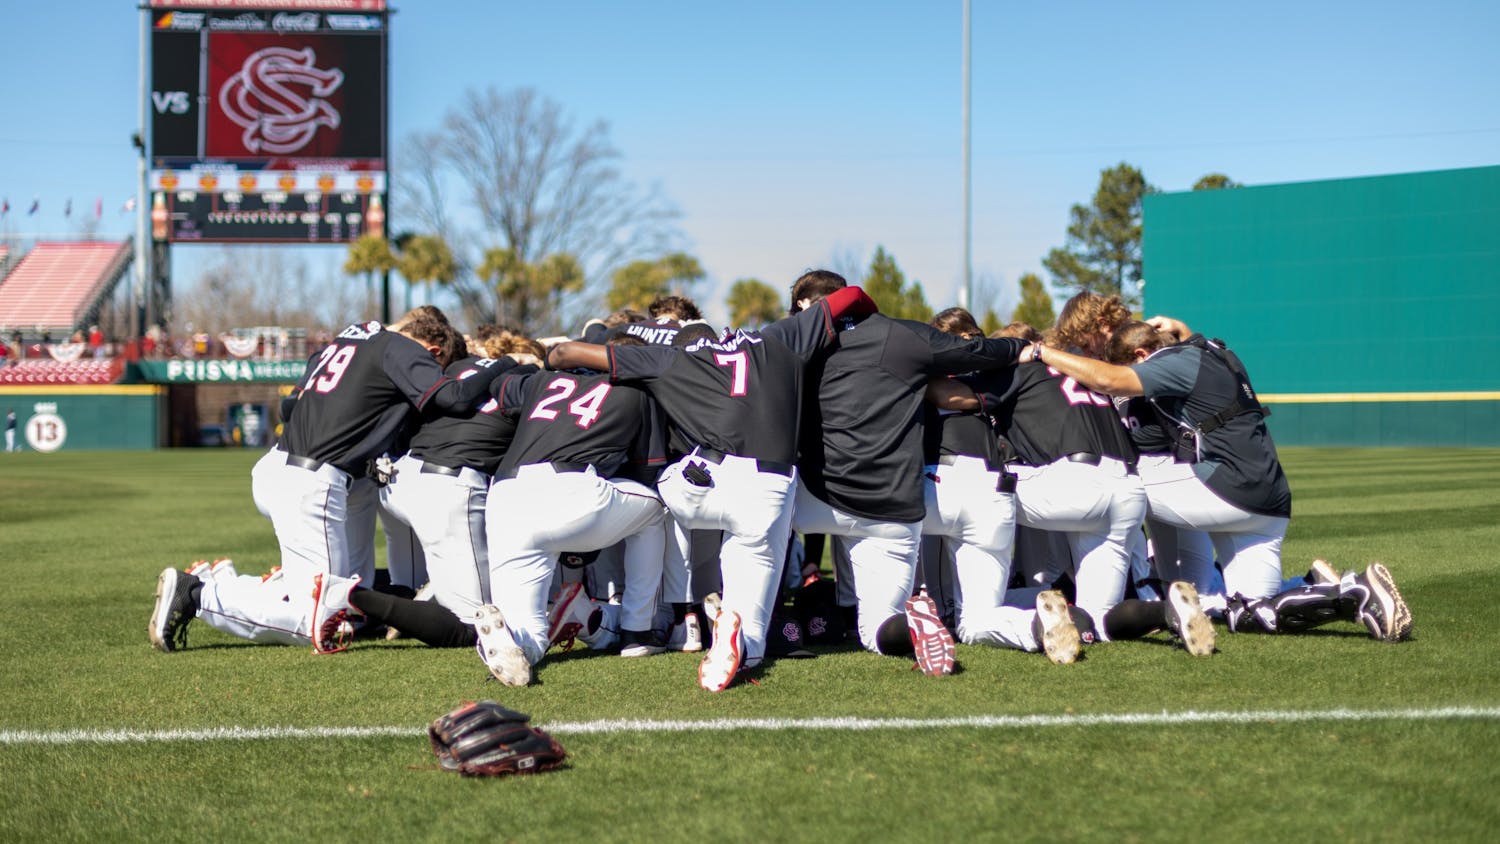 South Carolina's baseball team prays before a game against UNCG on Feb. 20, 2022.